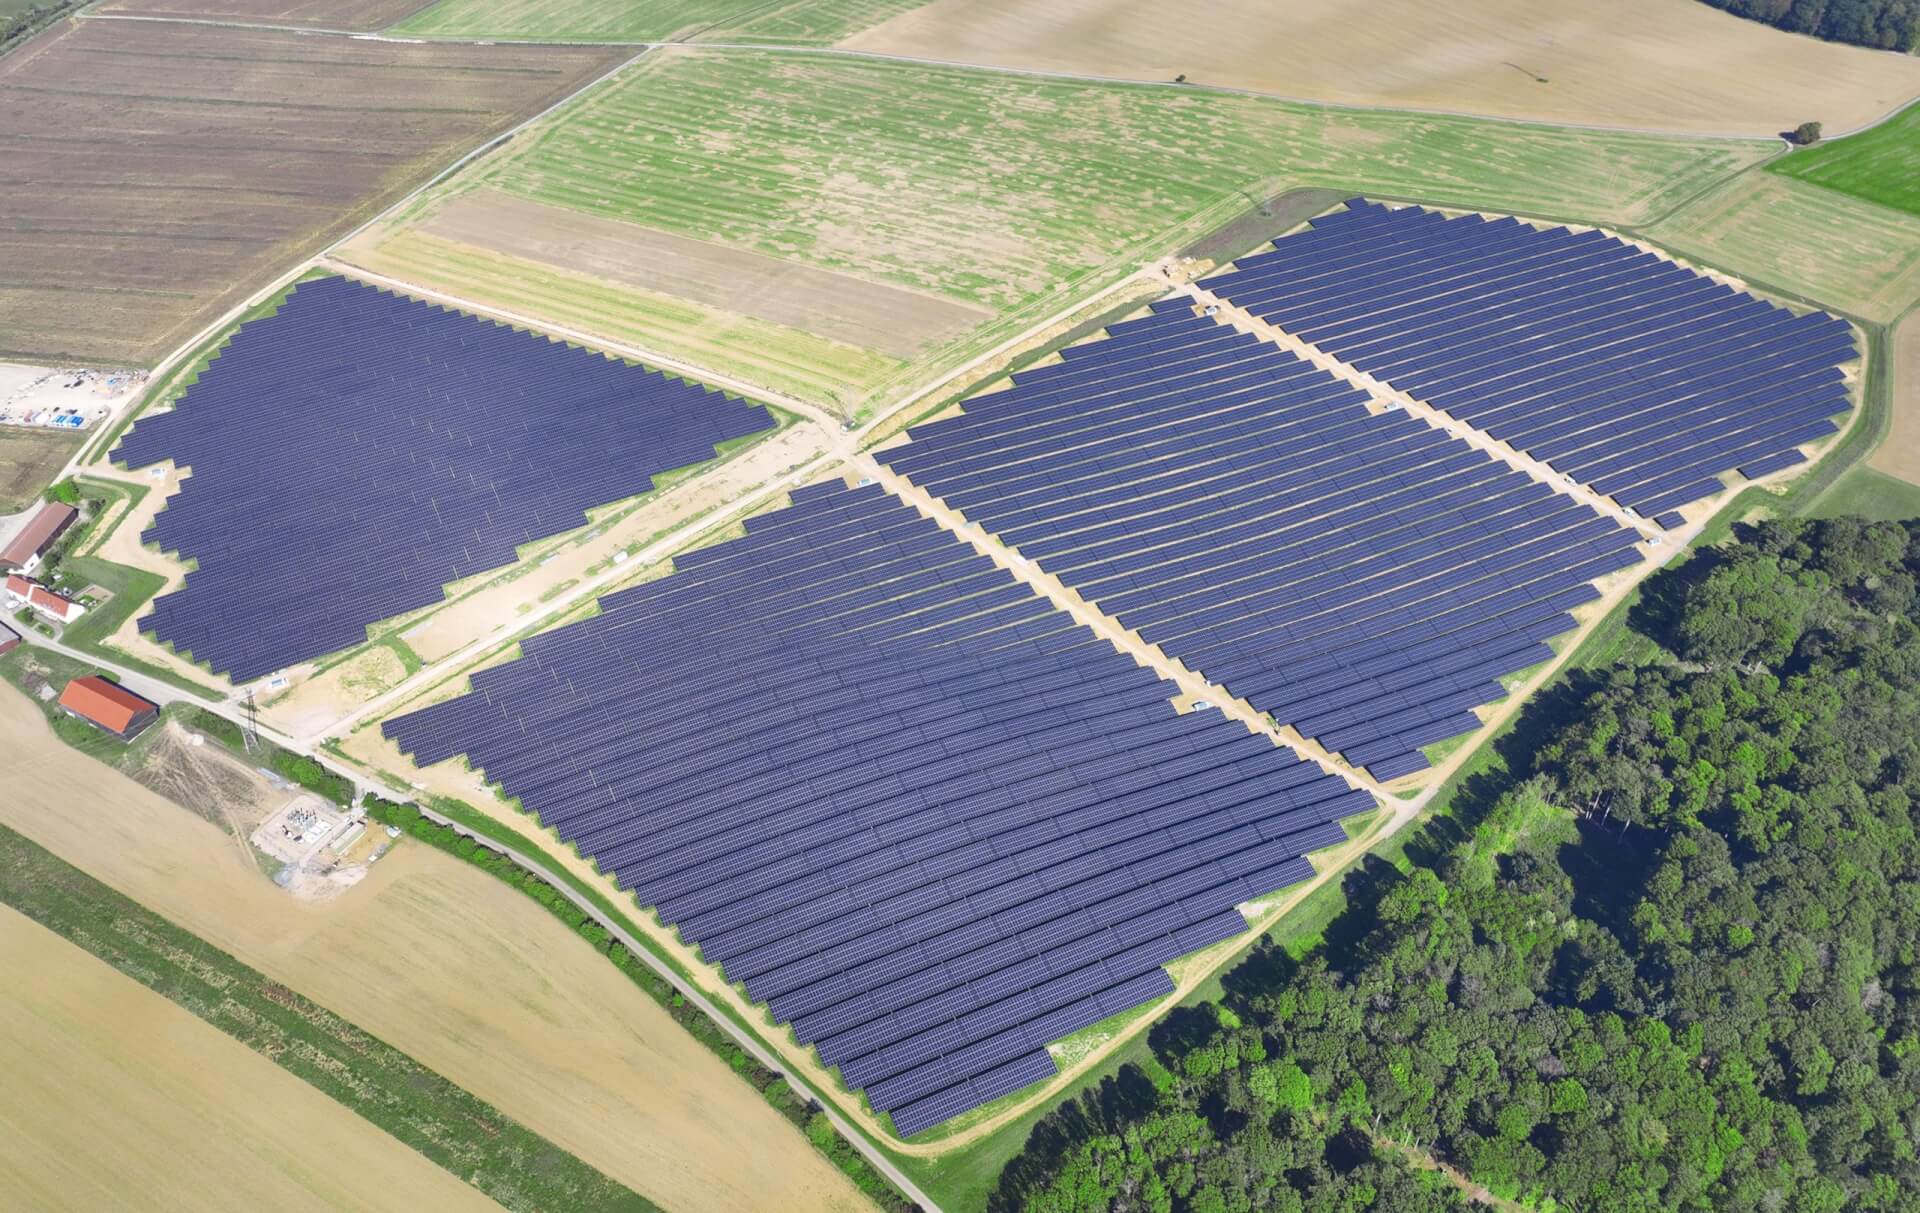 Deubach solar farm shown from above